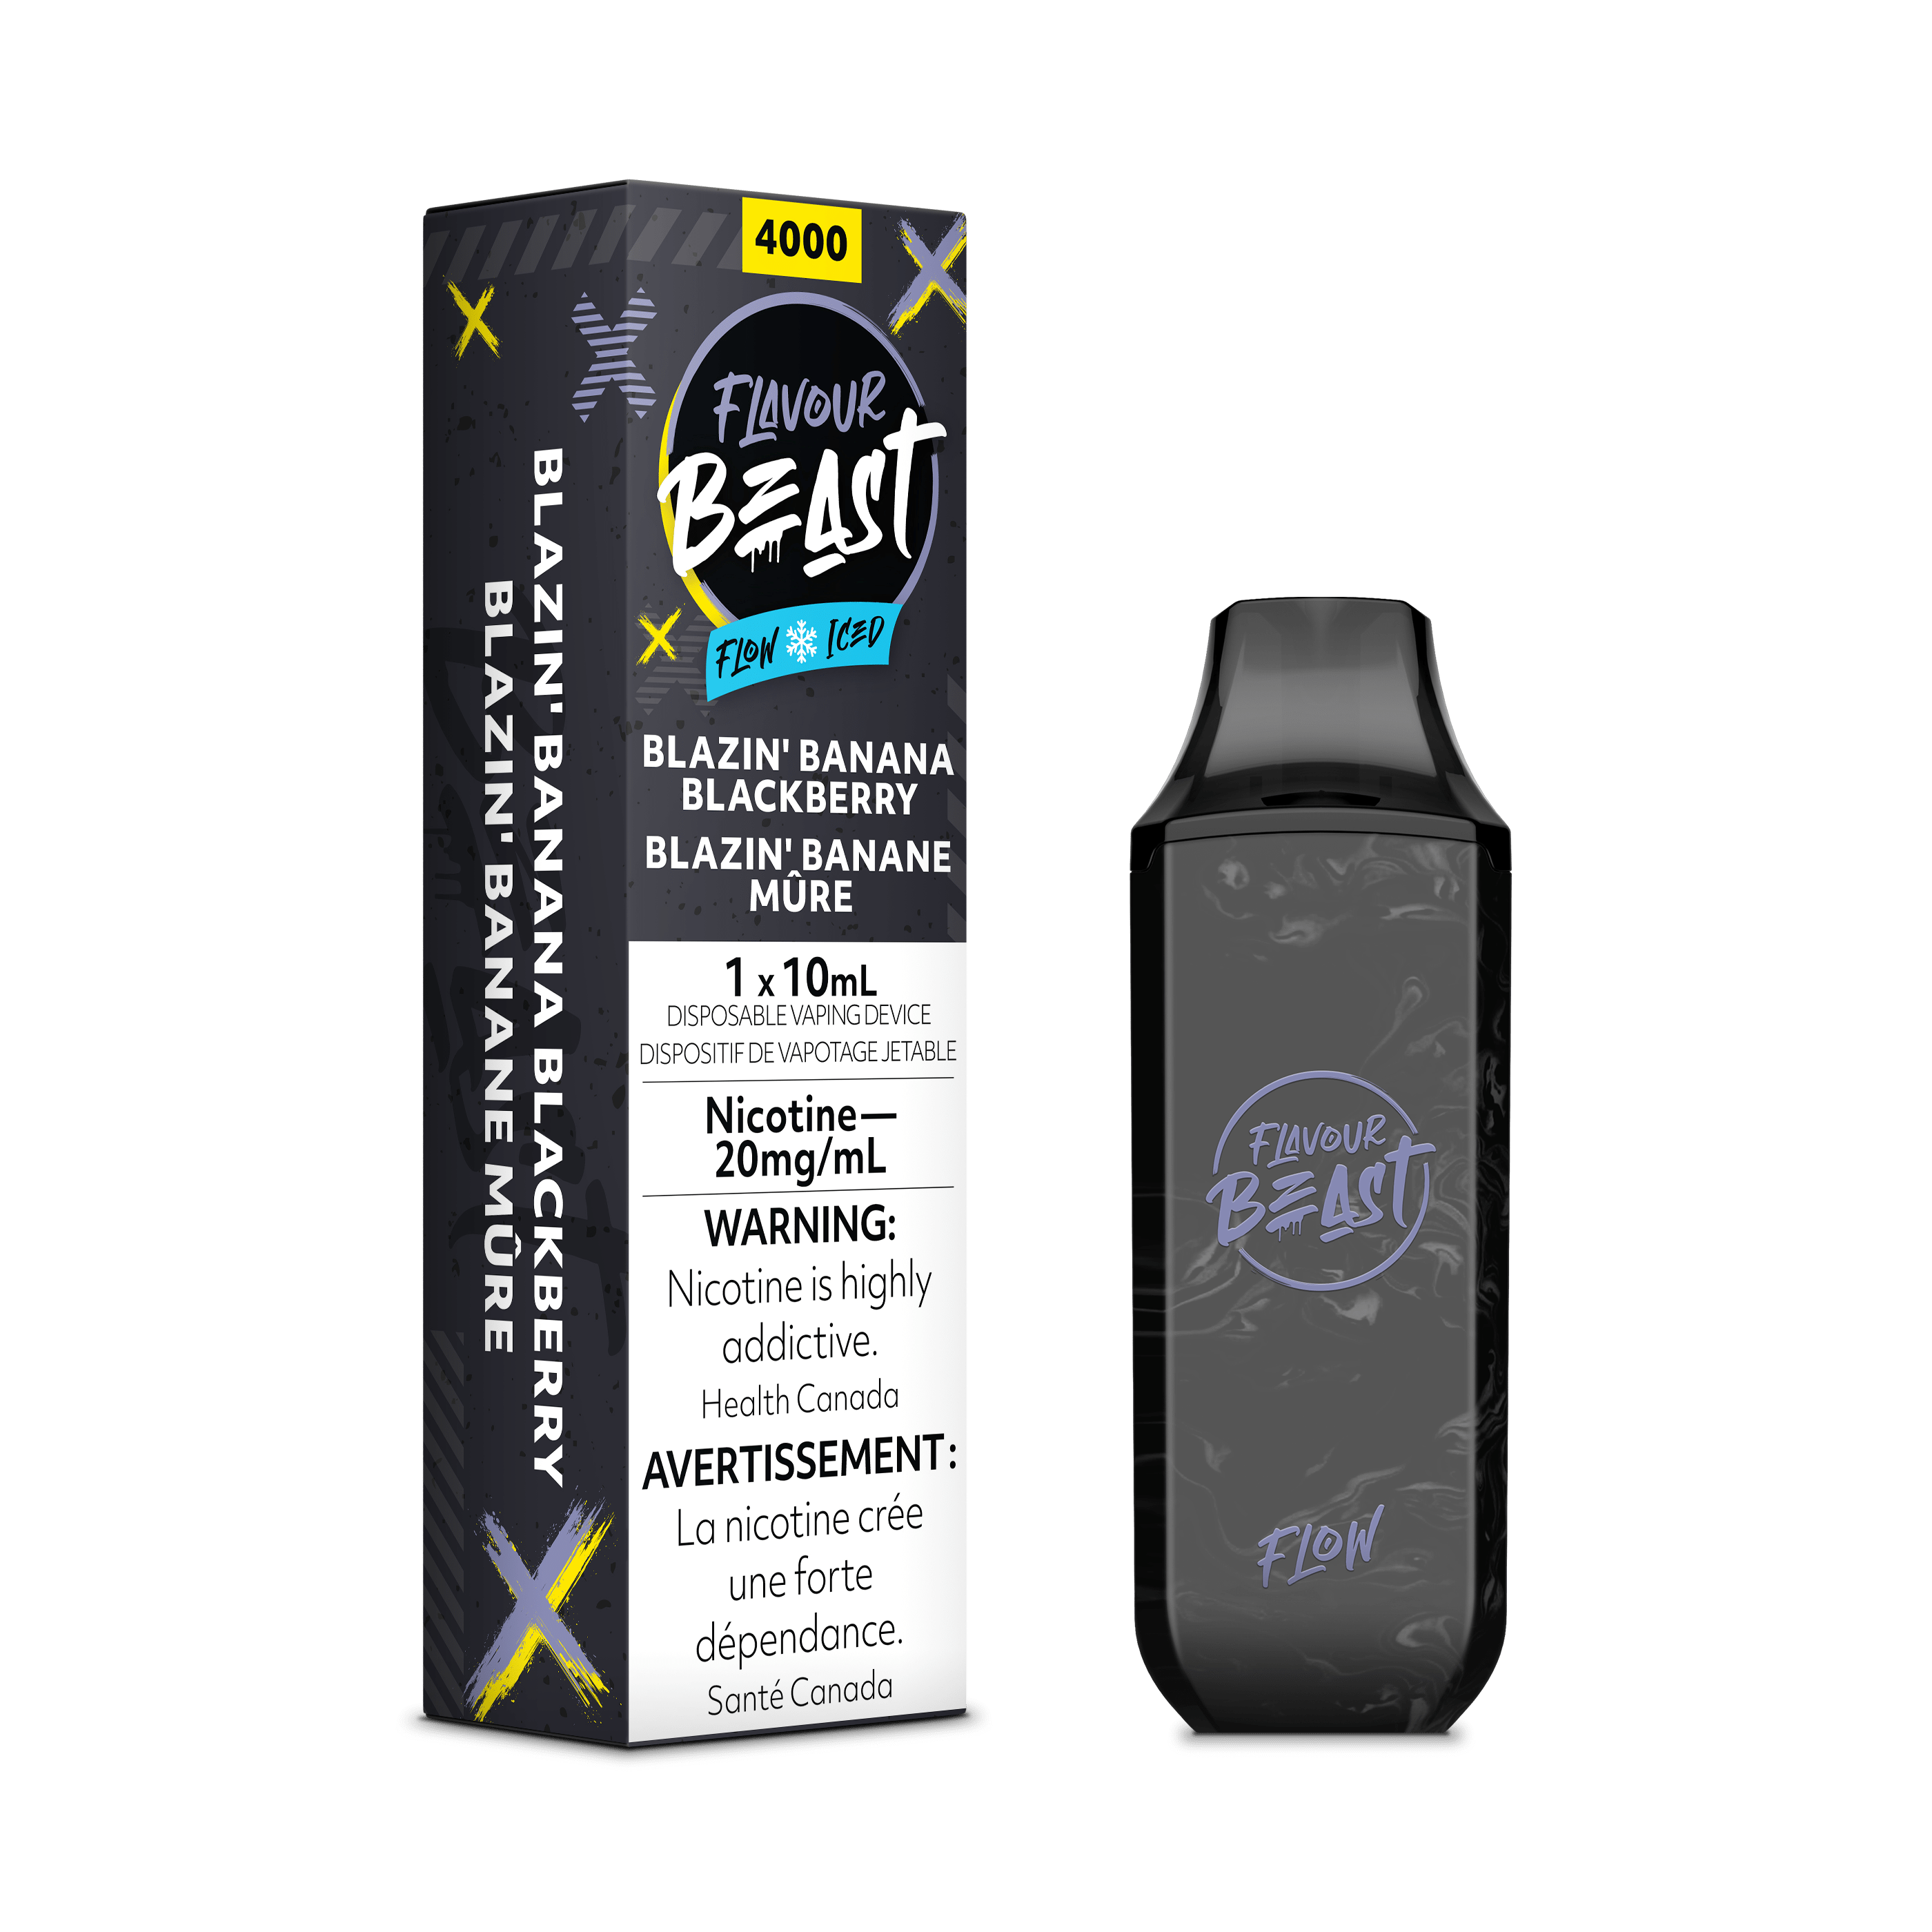 Flavour Beast Flow Disposable Vape - Blazin' Banana Blackberry Iced available on Canada online vape shop